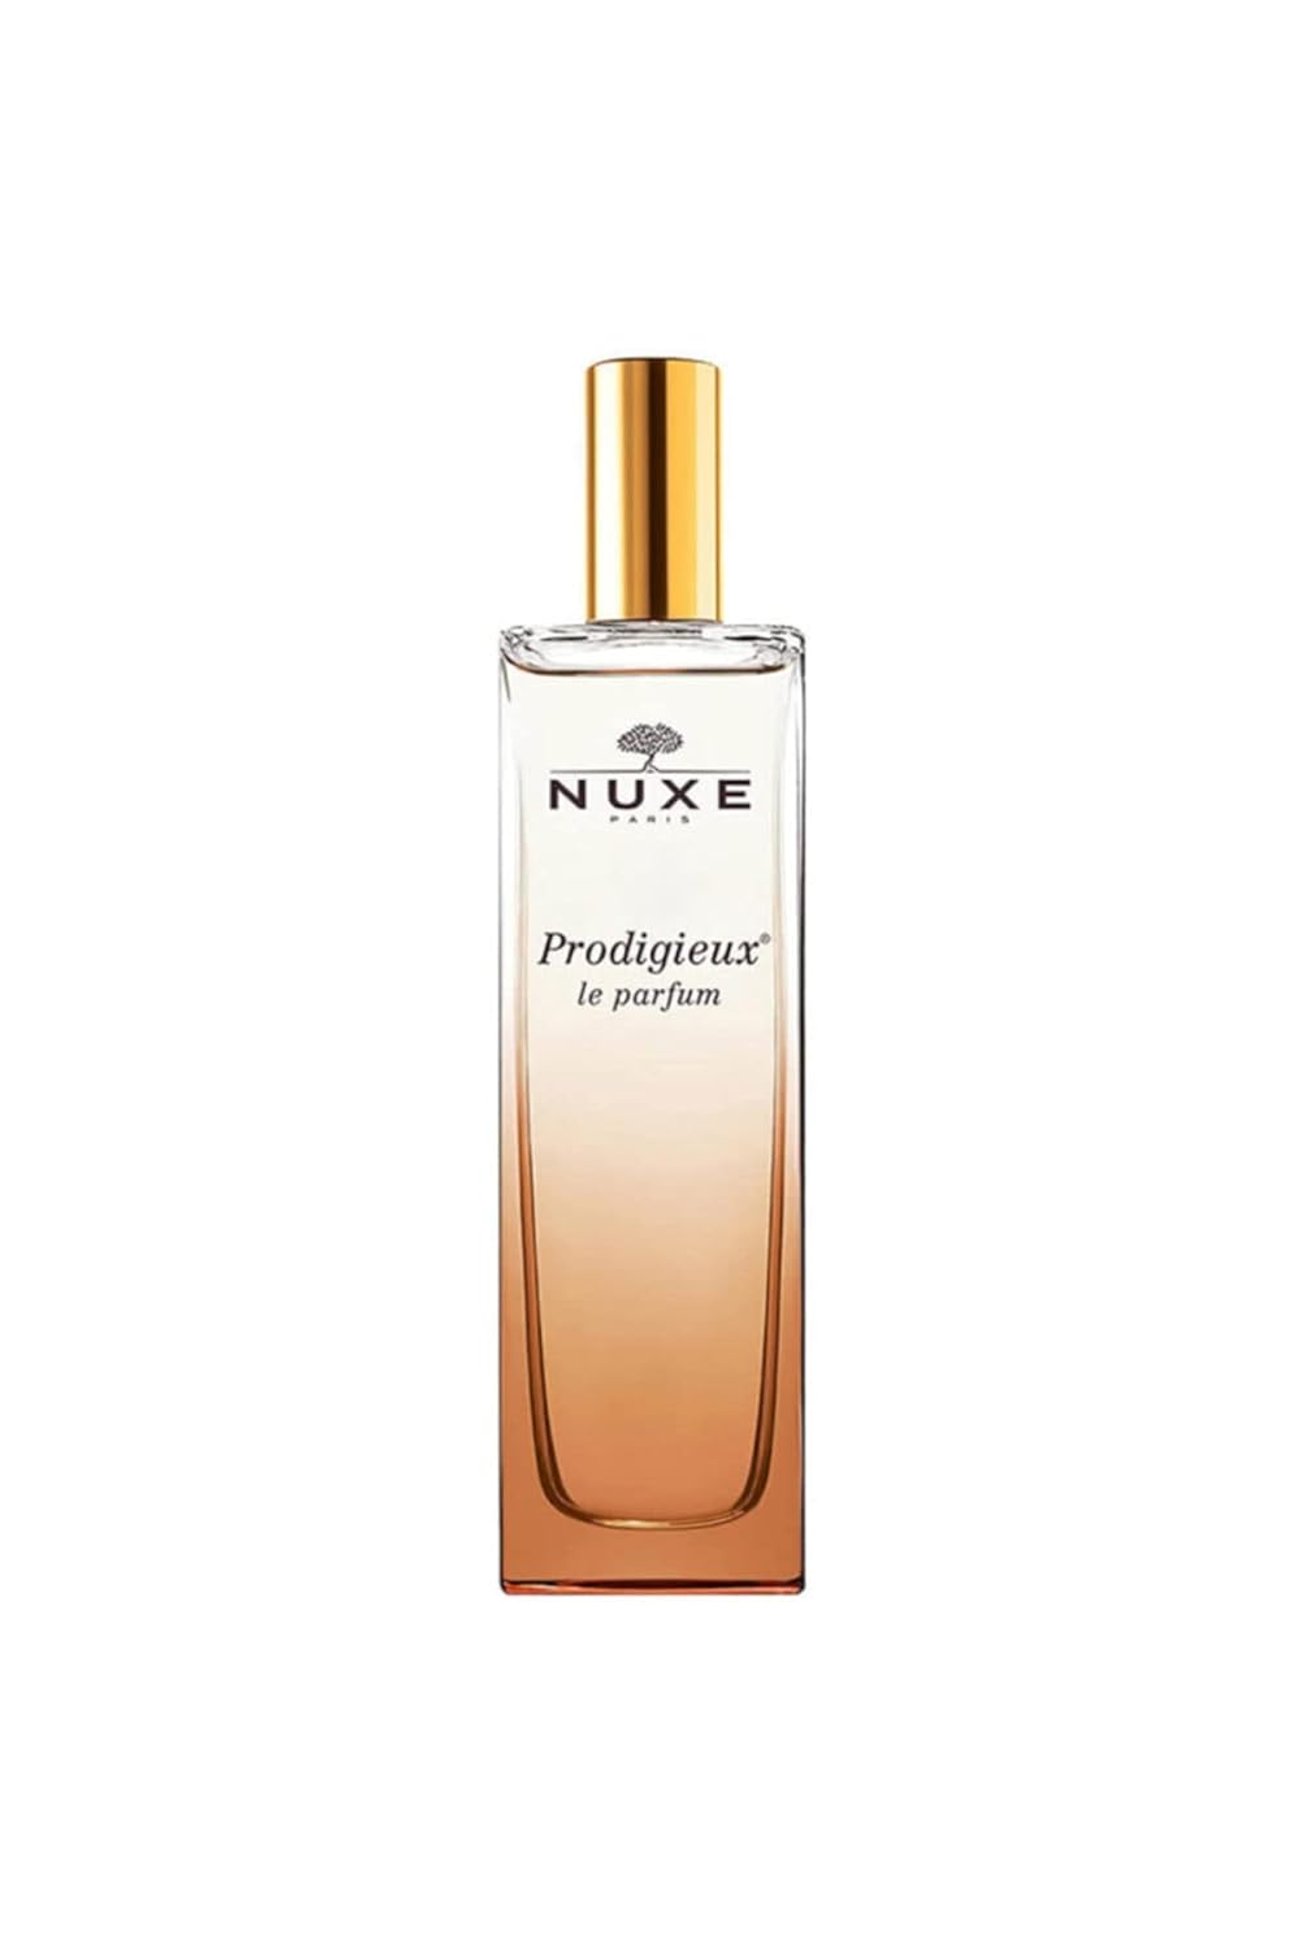 NUXE Prodigieux le parfum Spray 50ml